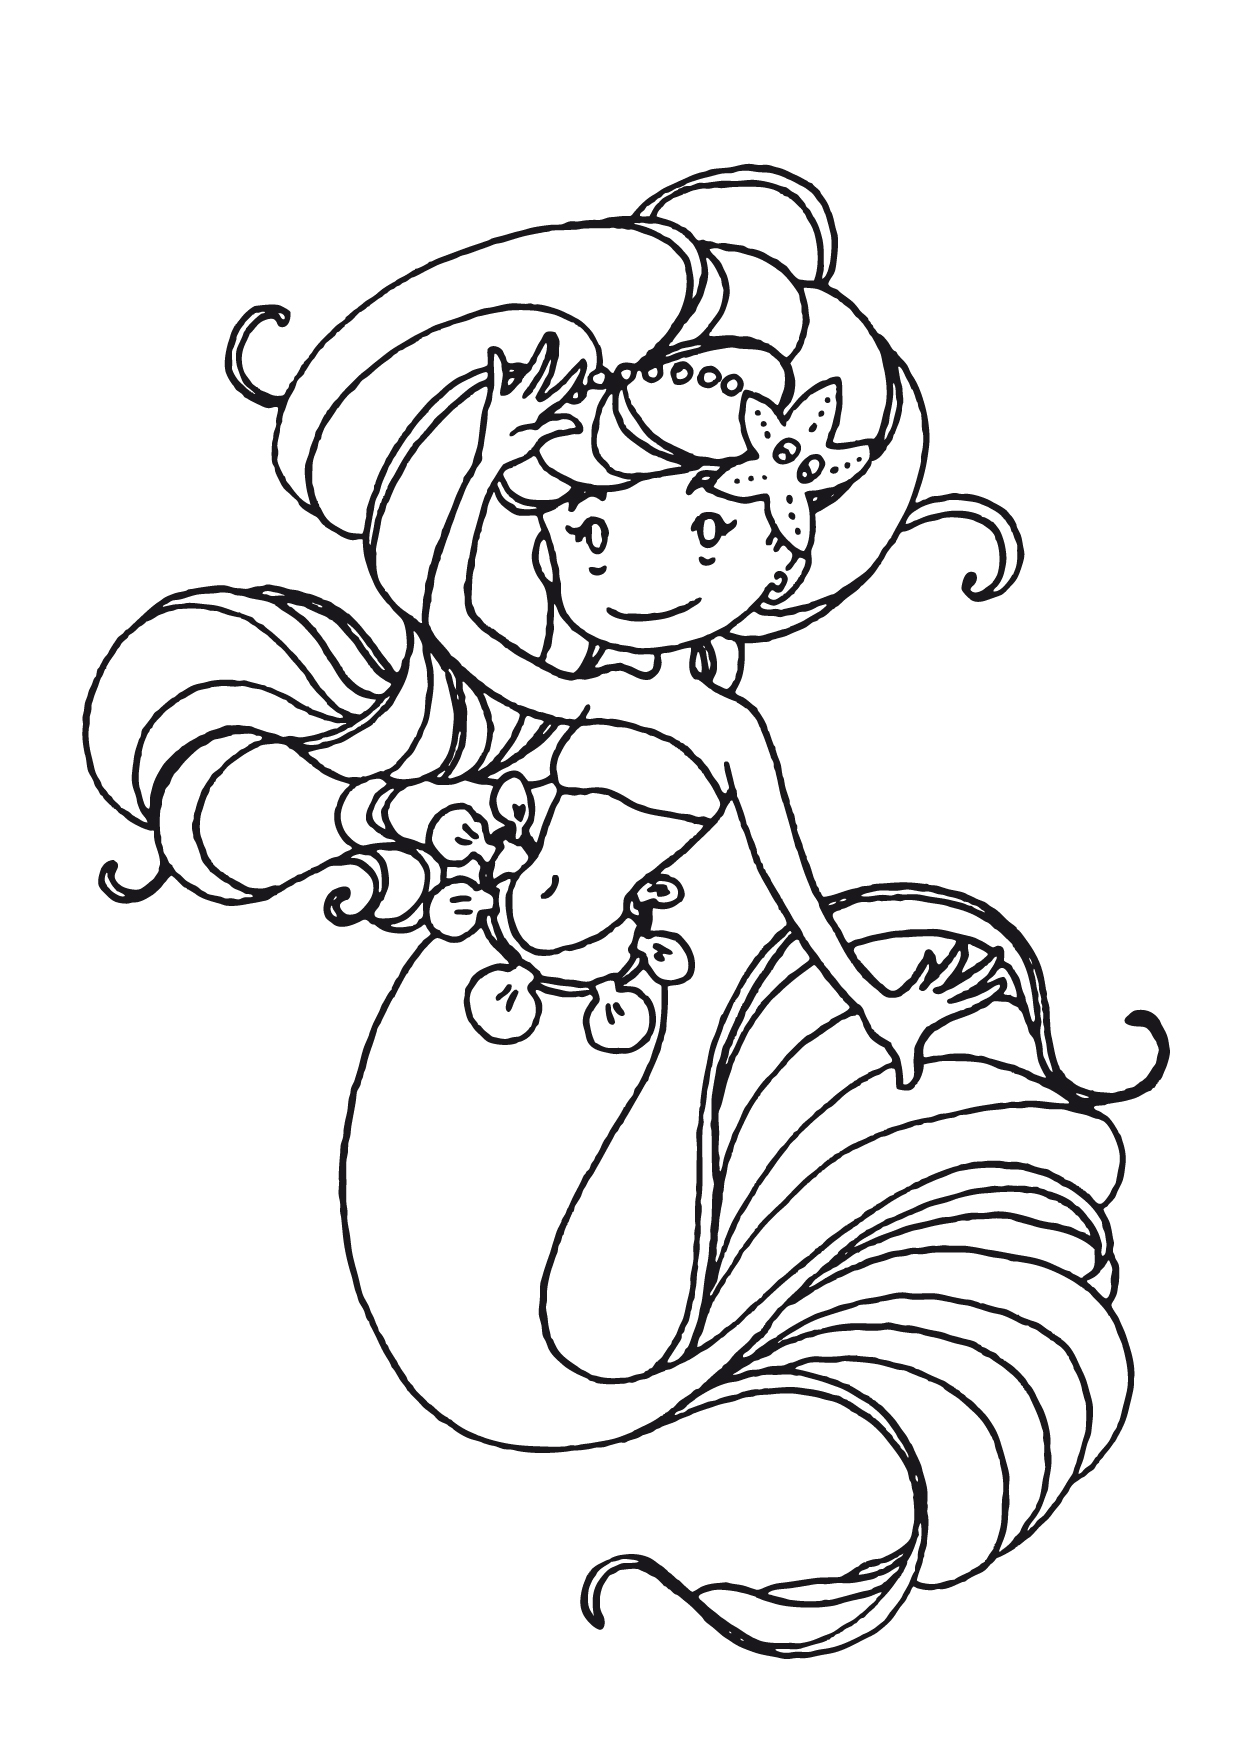 Super simple mermaid coloring page